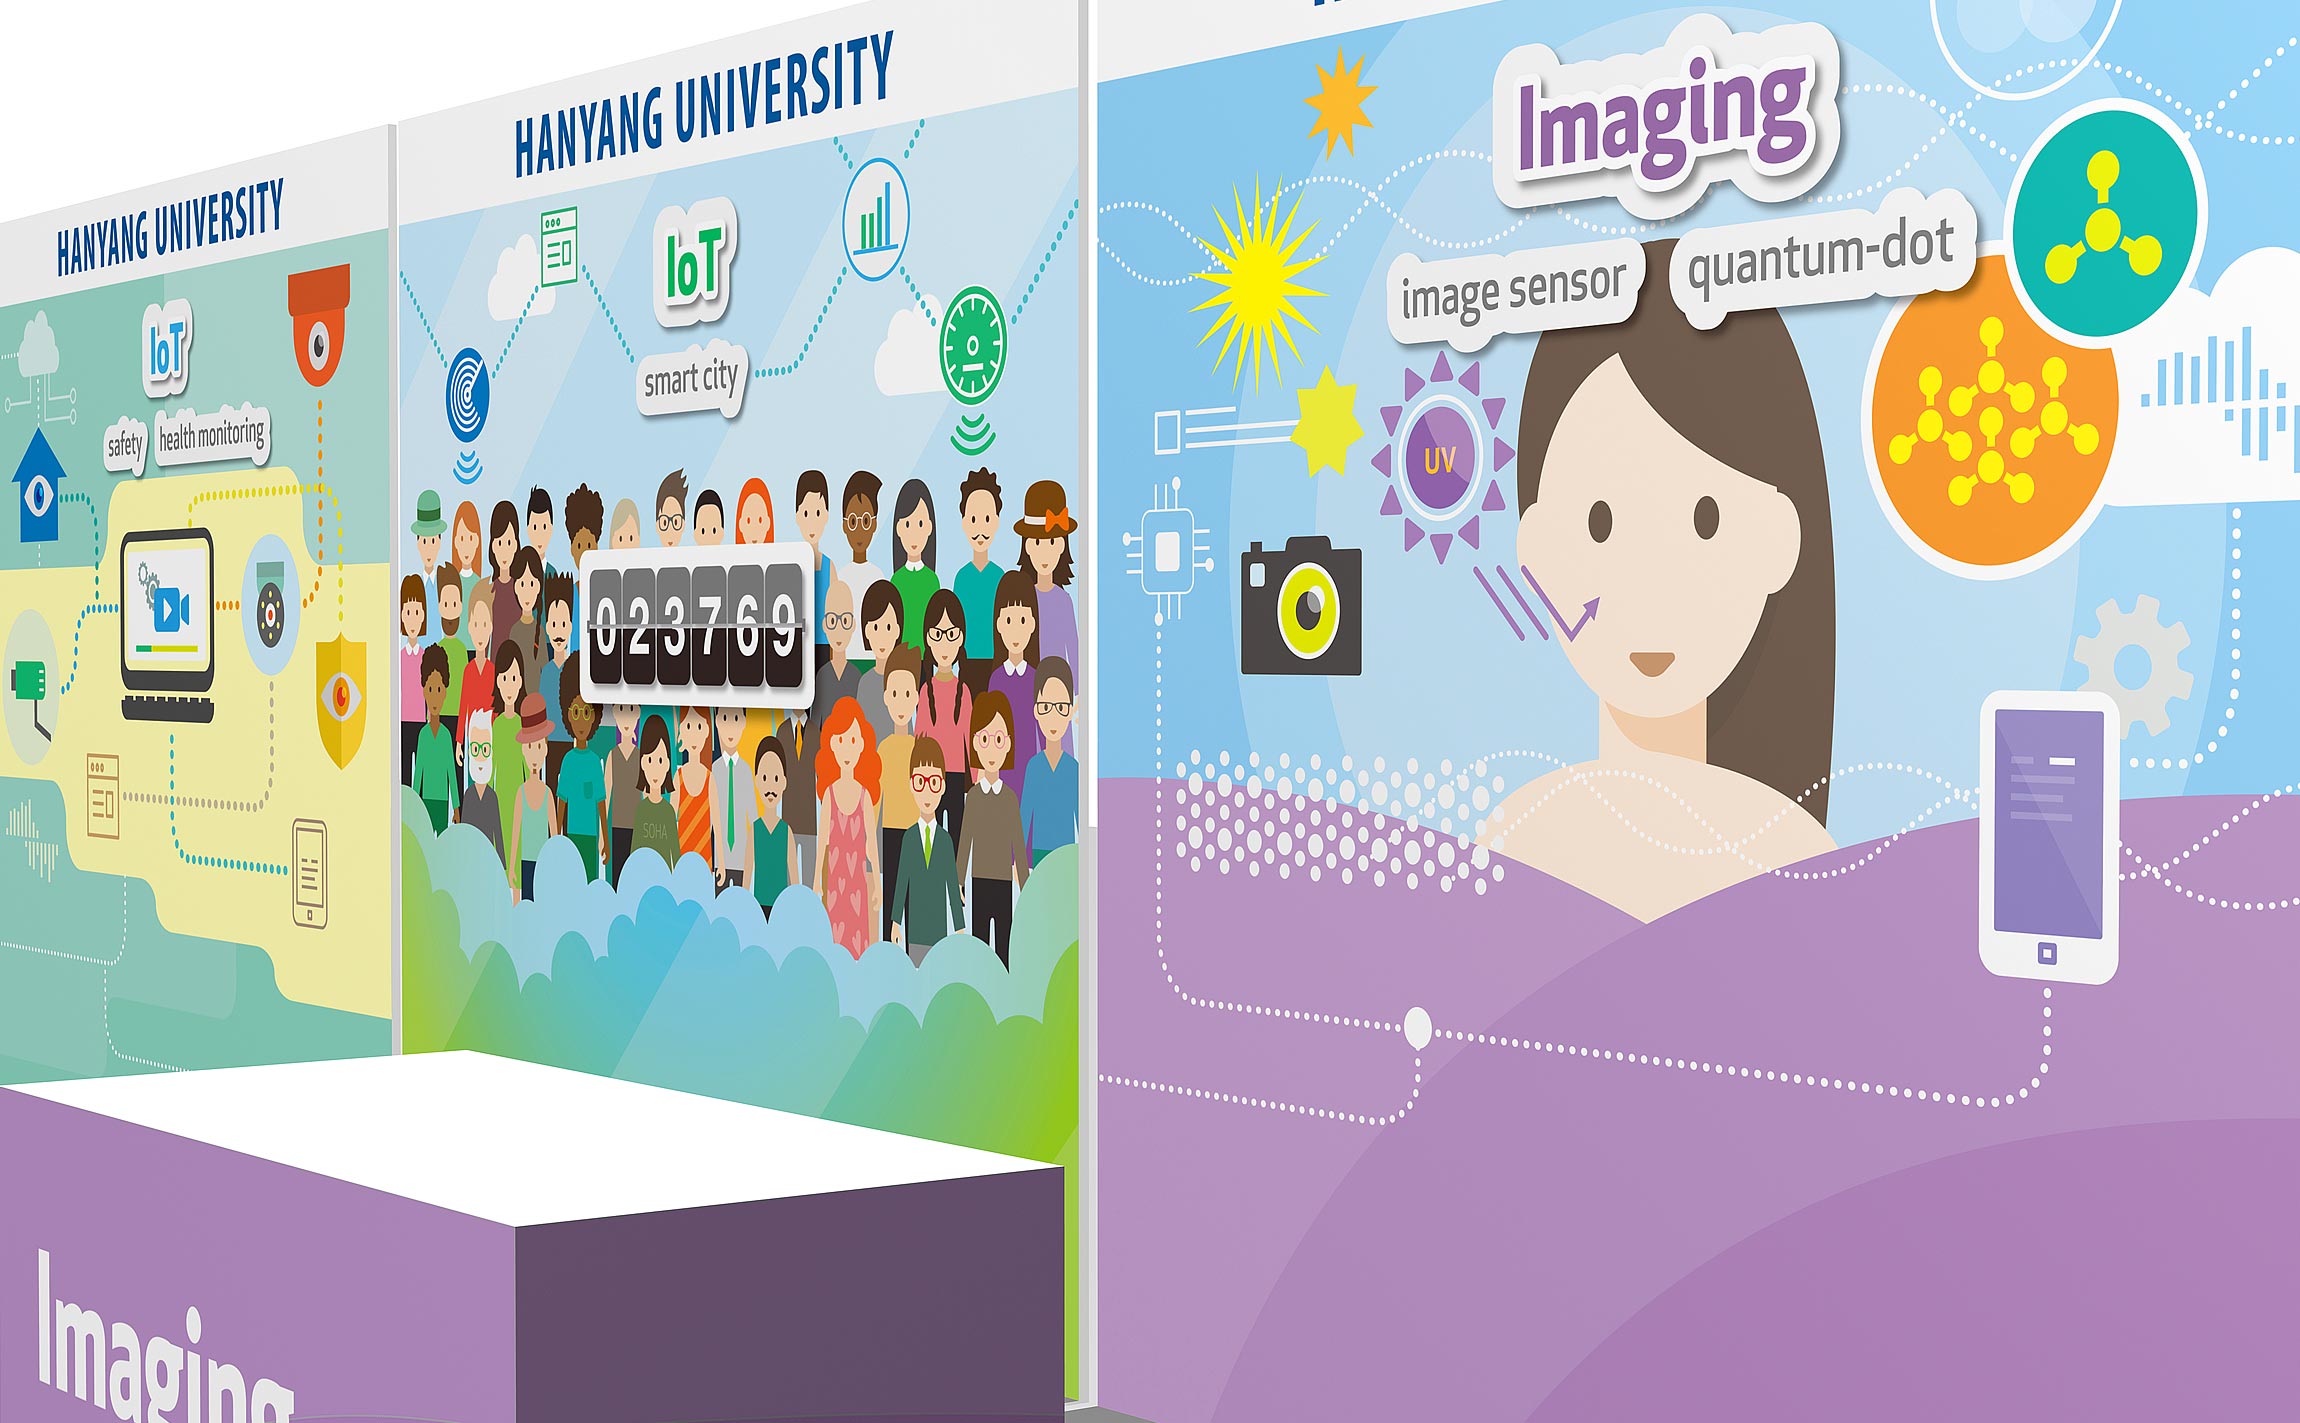 Hanyang University CES Booth Graphic Hanyang University Exibition & Environmental hanyang_univ_graphic-5.jpg